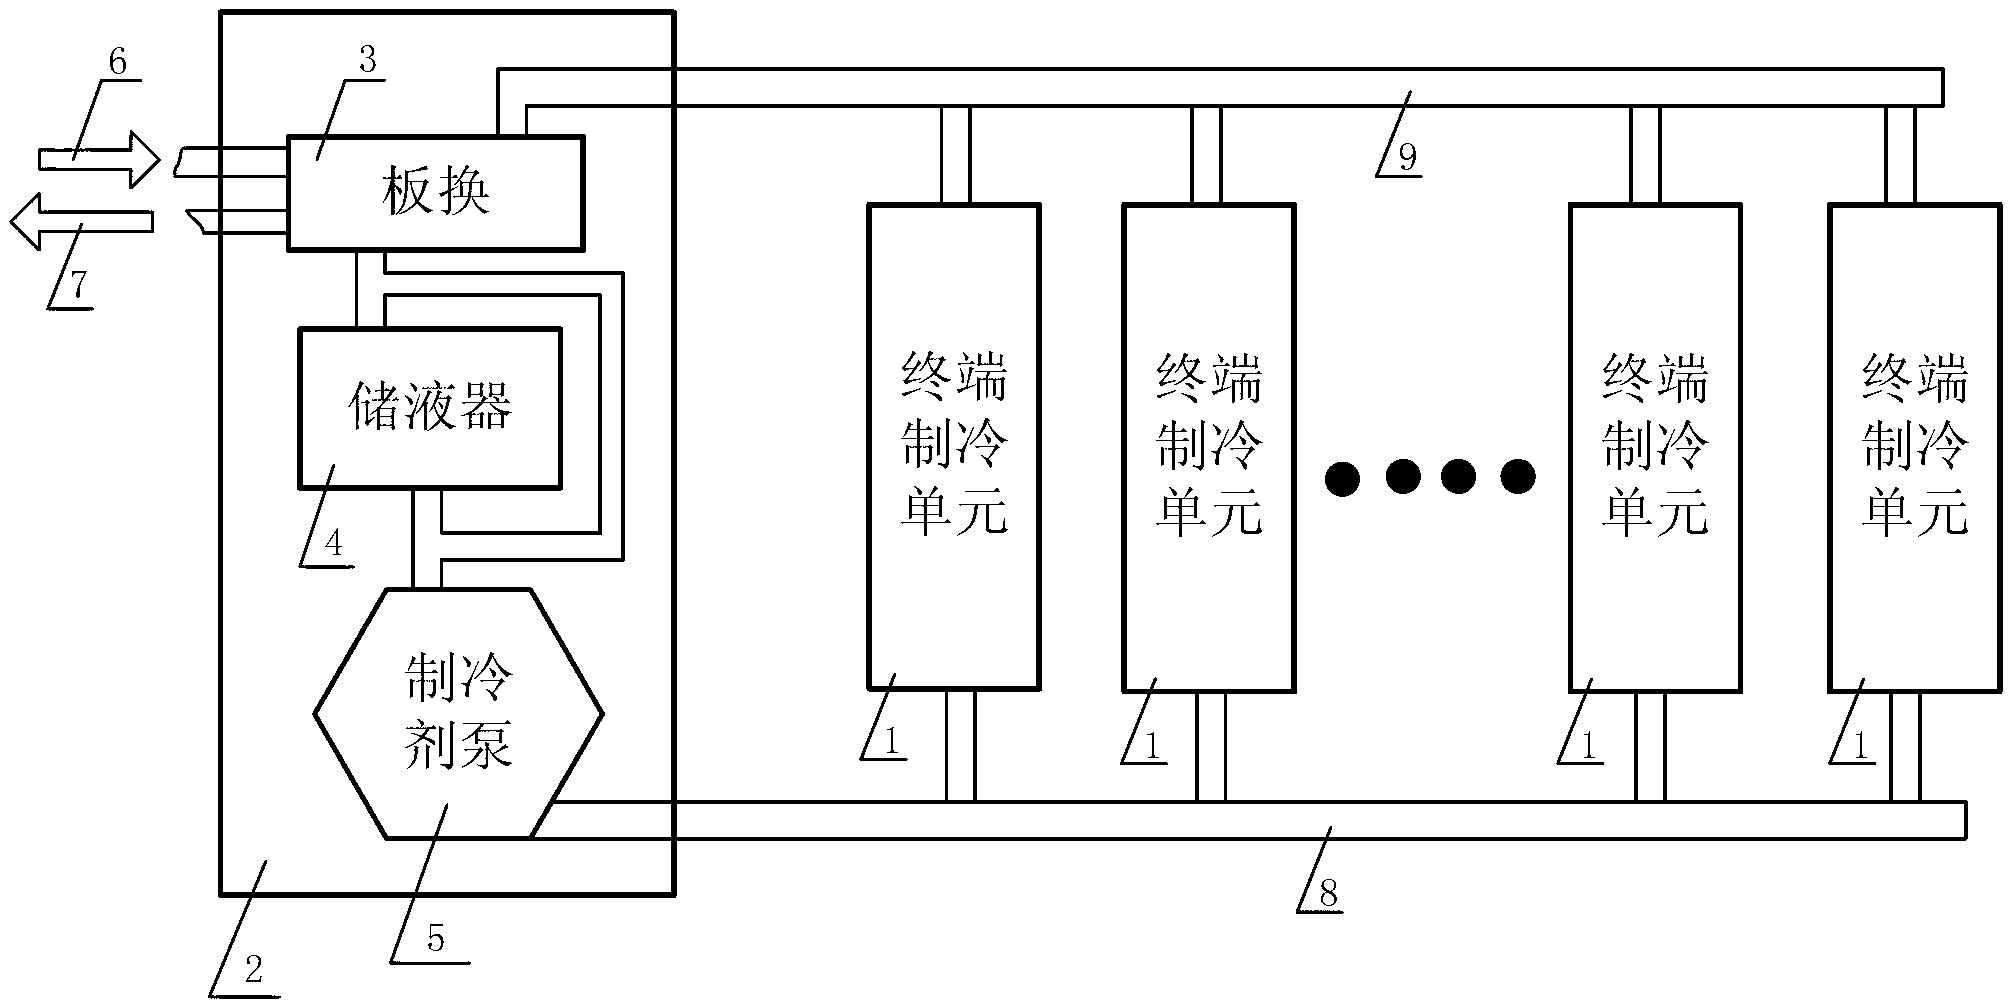 Terminal refrigeration system with refrigerant pump and data center terminal refrigeration system